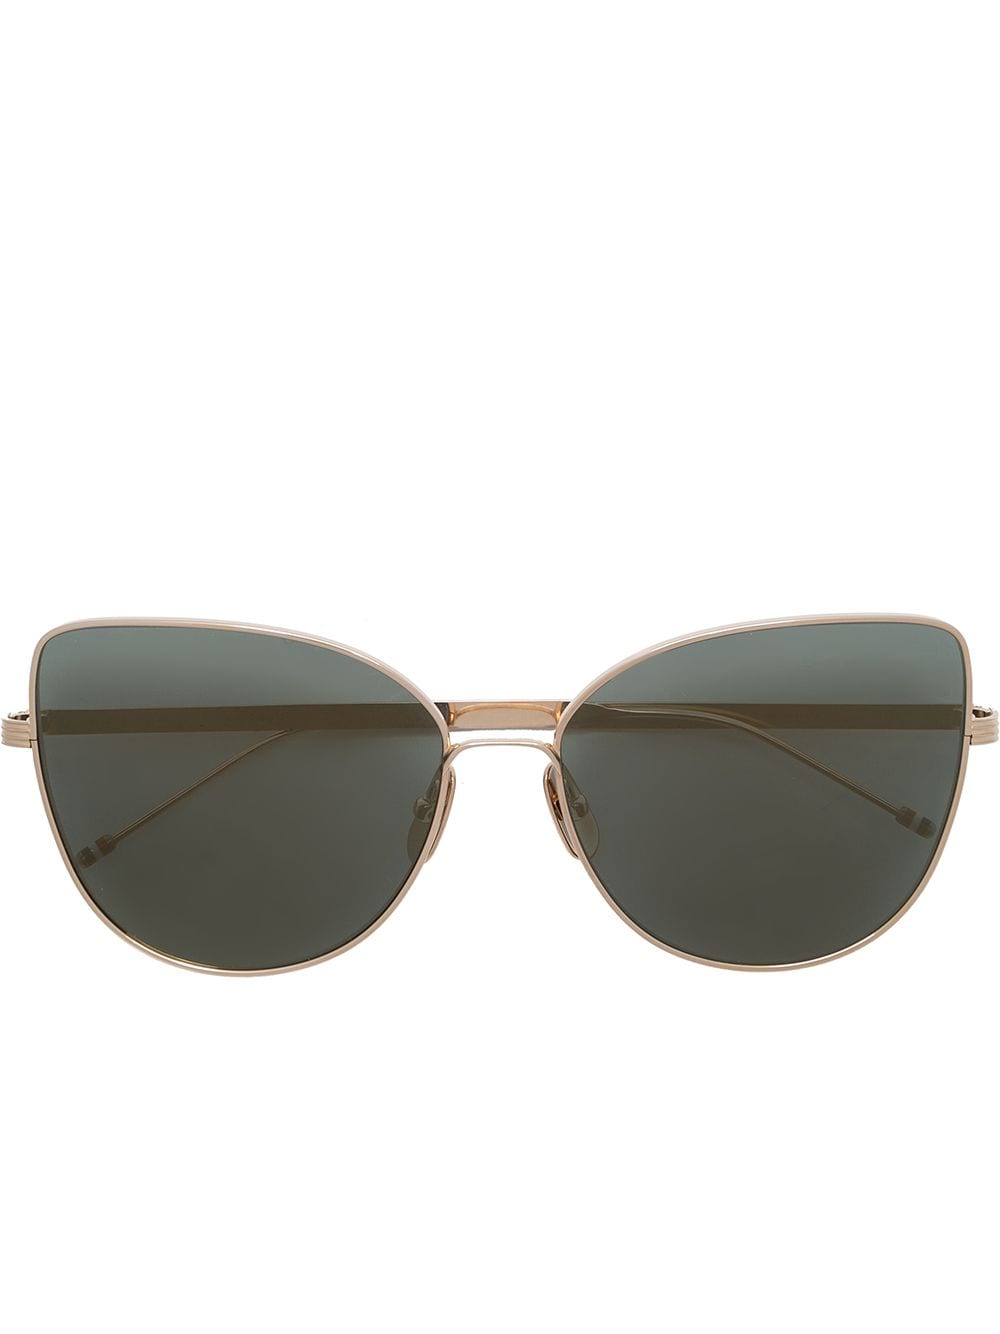 Thom Browne Eyewear TB121 cat-eye frame sunglasses - Gold von Thom Browne Eyewear